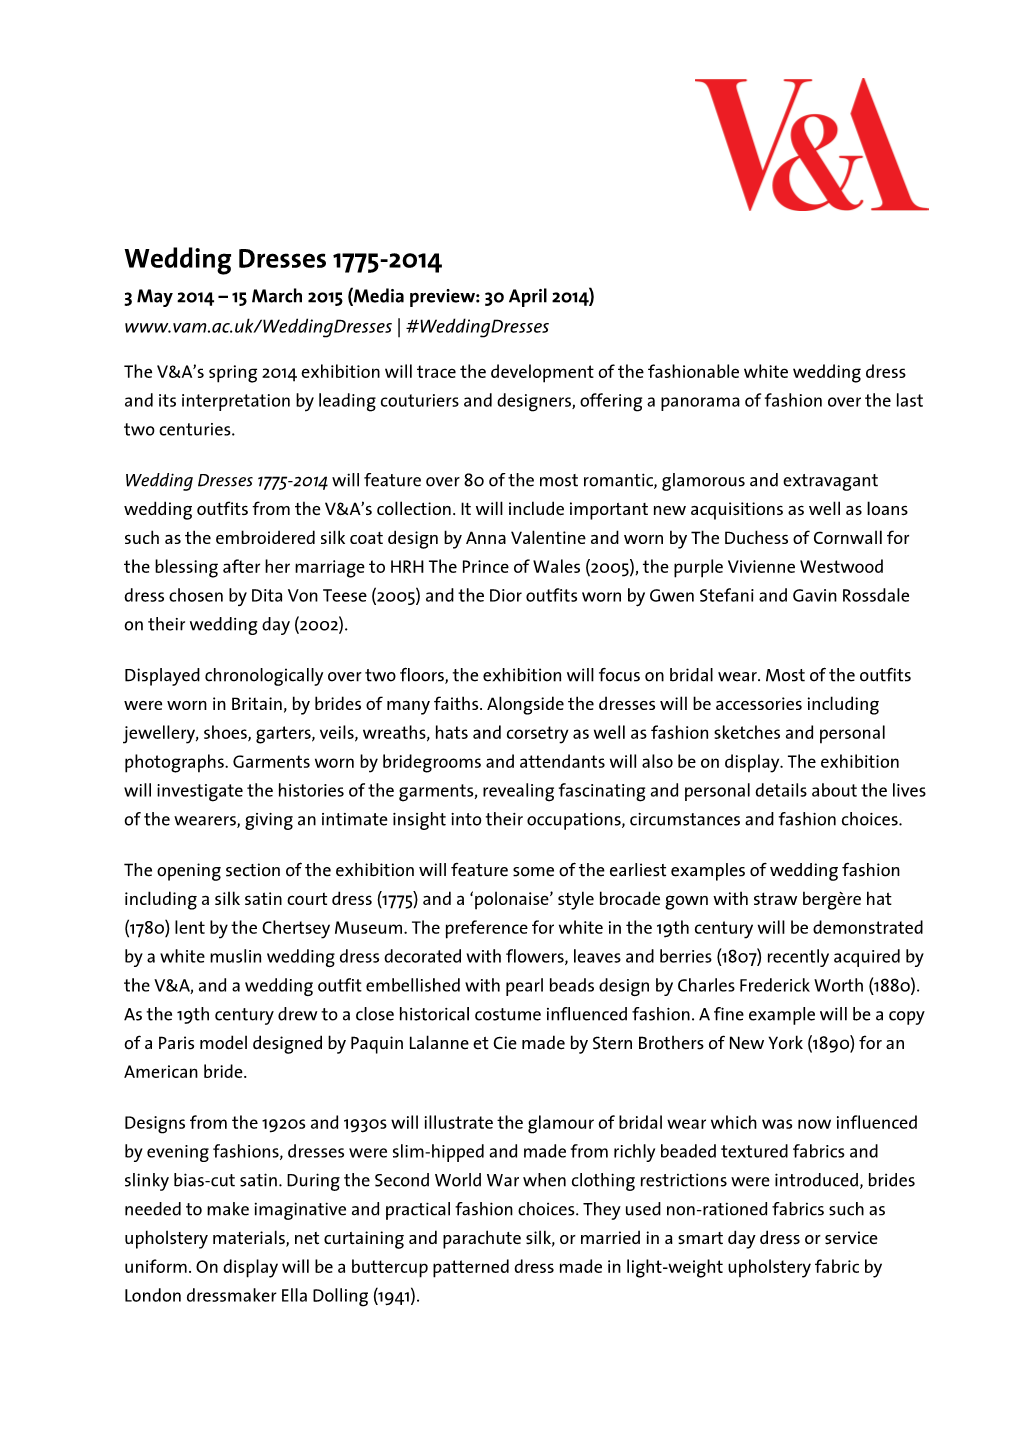 Wedding Dresses 1775-2014 Press Release FINAL